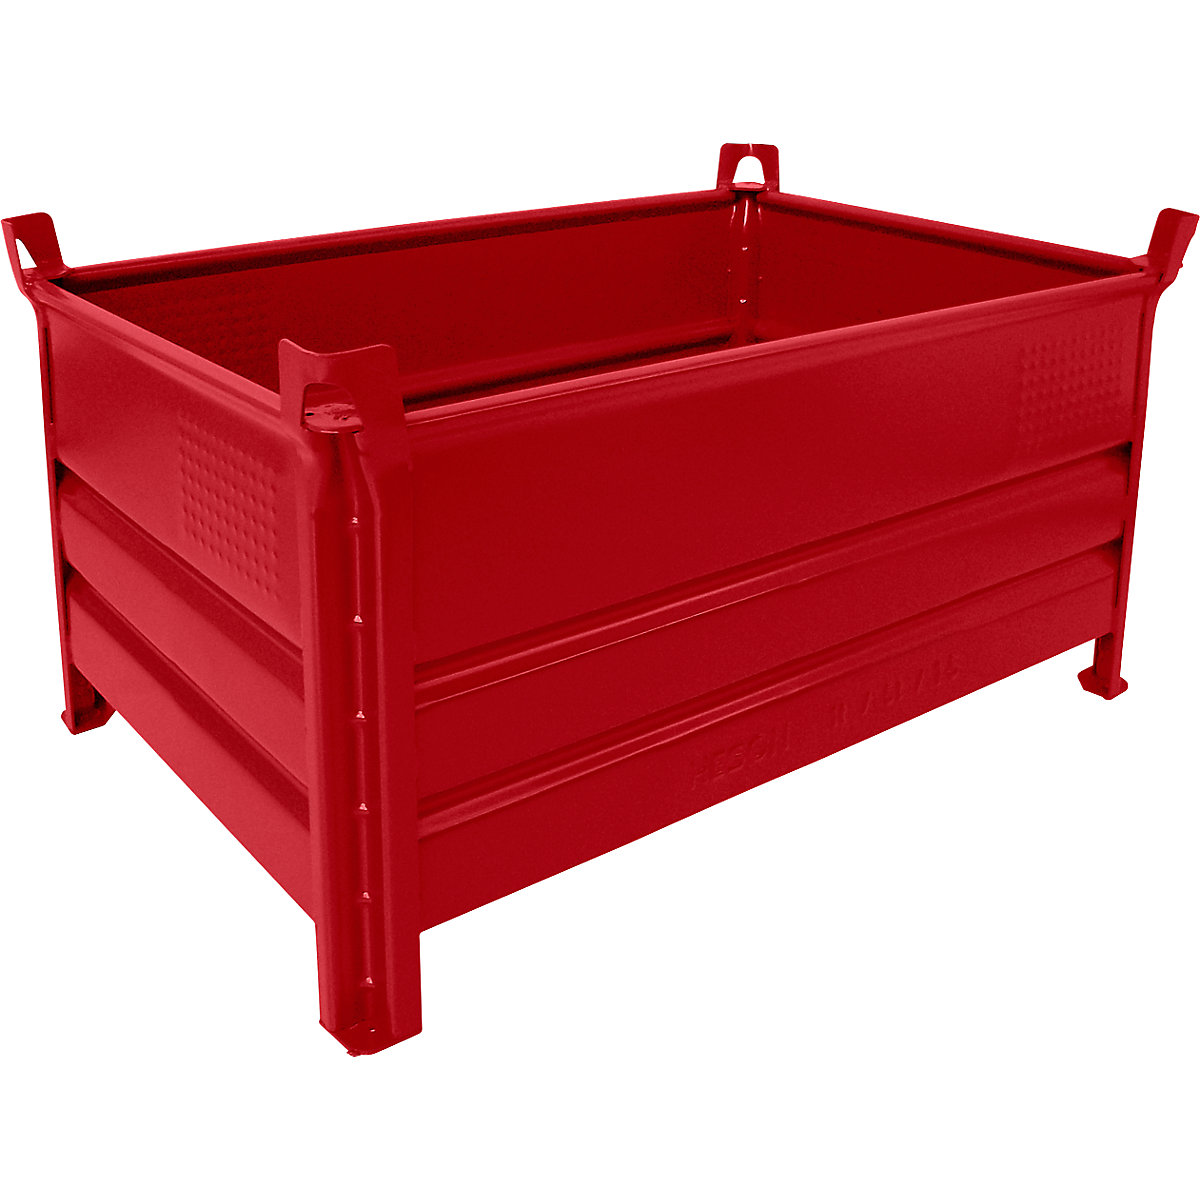 Heson Vollwand-Stapelbehälter, BxL 800 x 1200 mm, Traglast 2000 kg, rot, ab 10 Stk